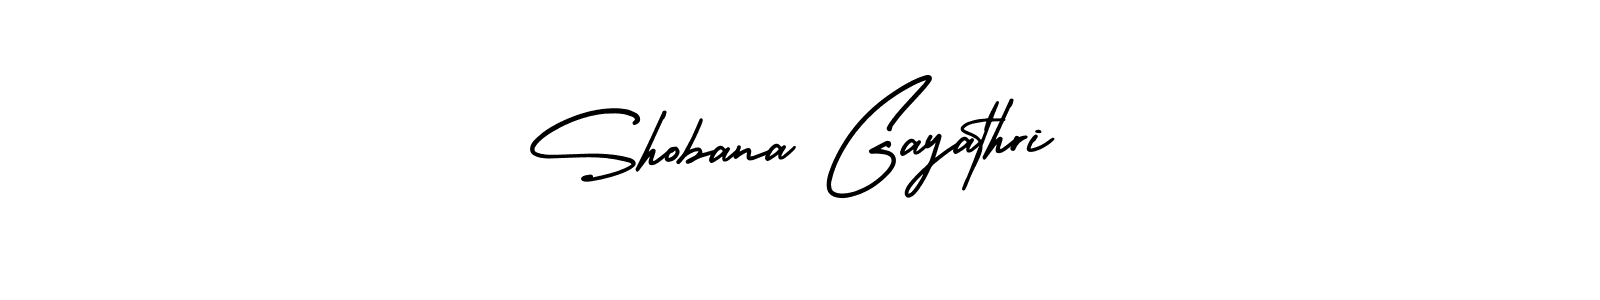 How to Draw Shobana Gayathri signature style? AmerikaSignatureDemo-Regular is a latest design signature styles for name Shobana Gayathri. Shobana Gayathri signature style 3 images and pictures png